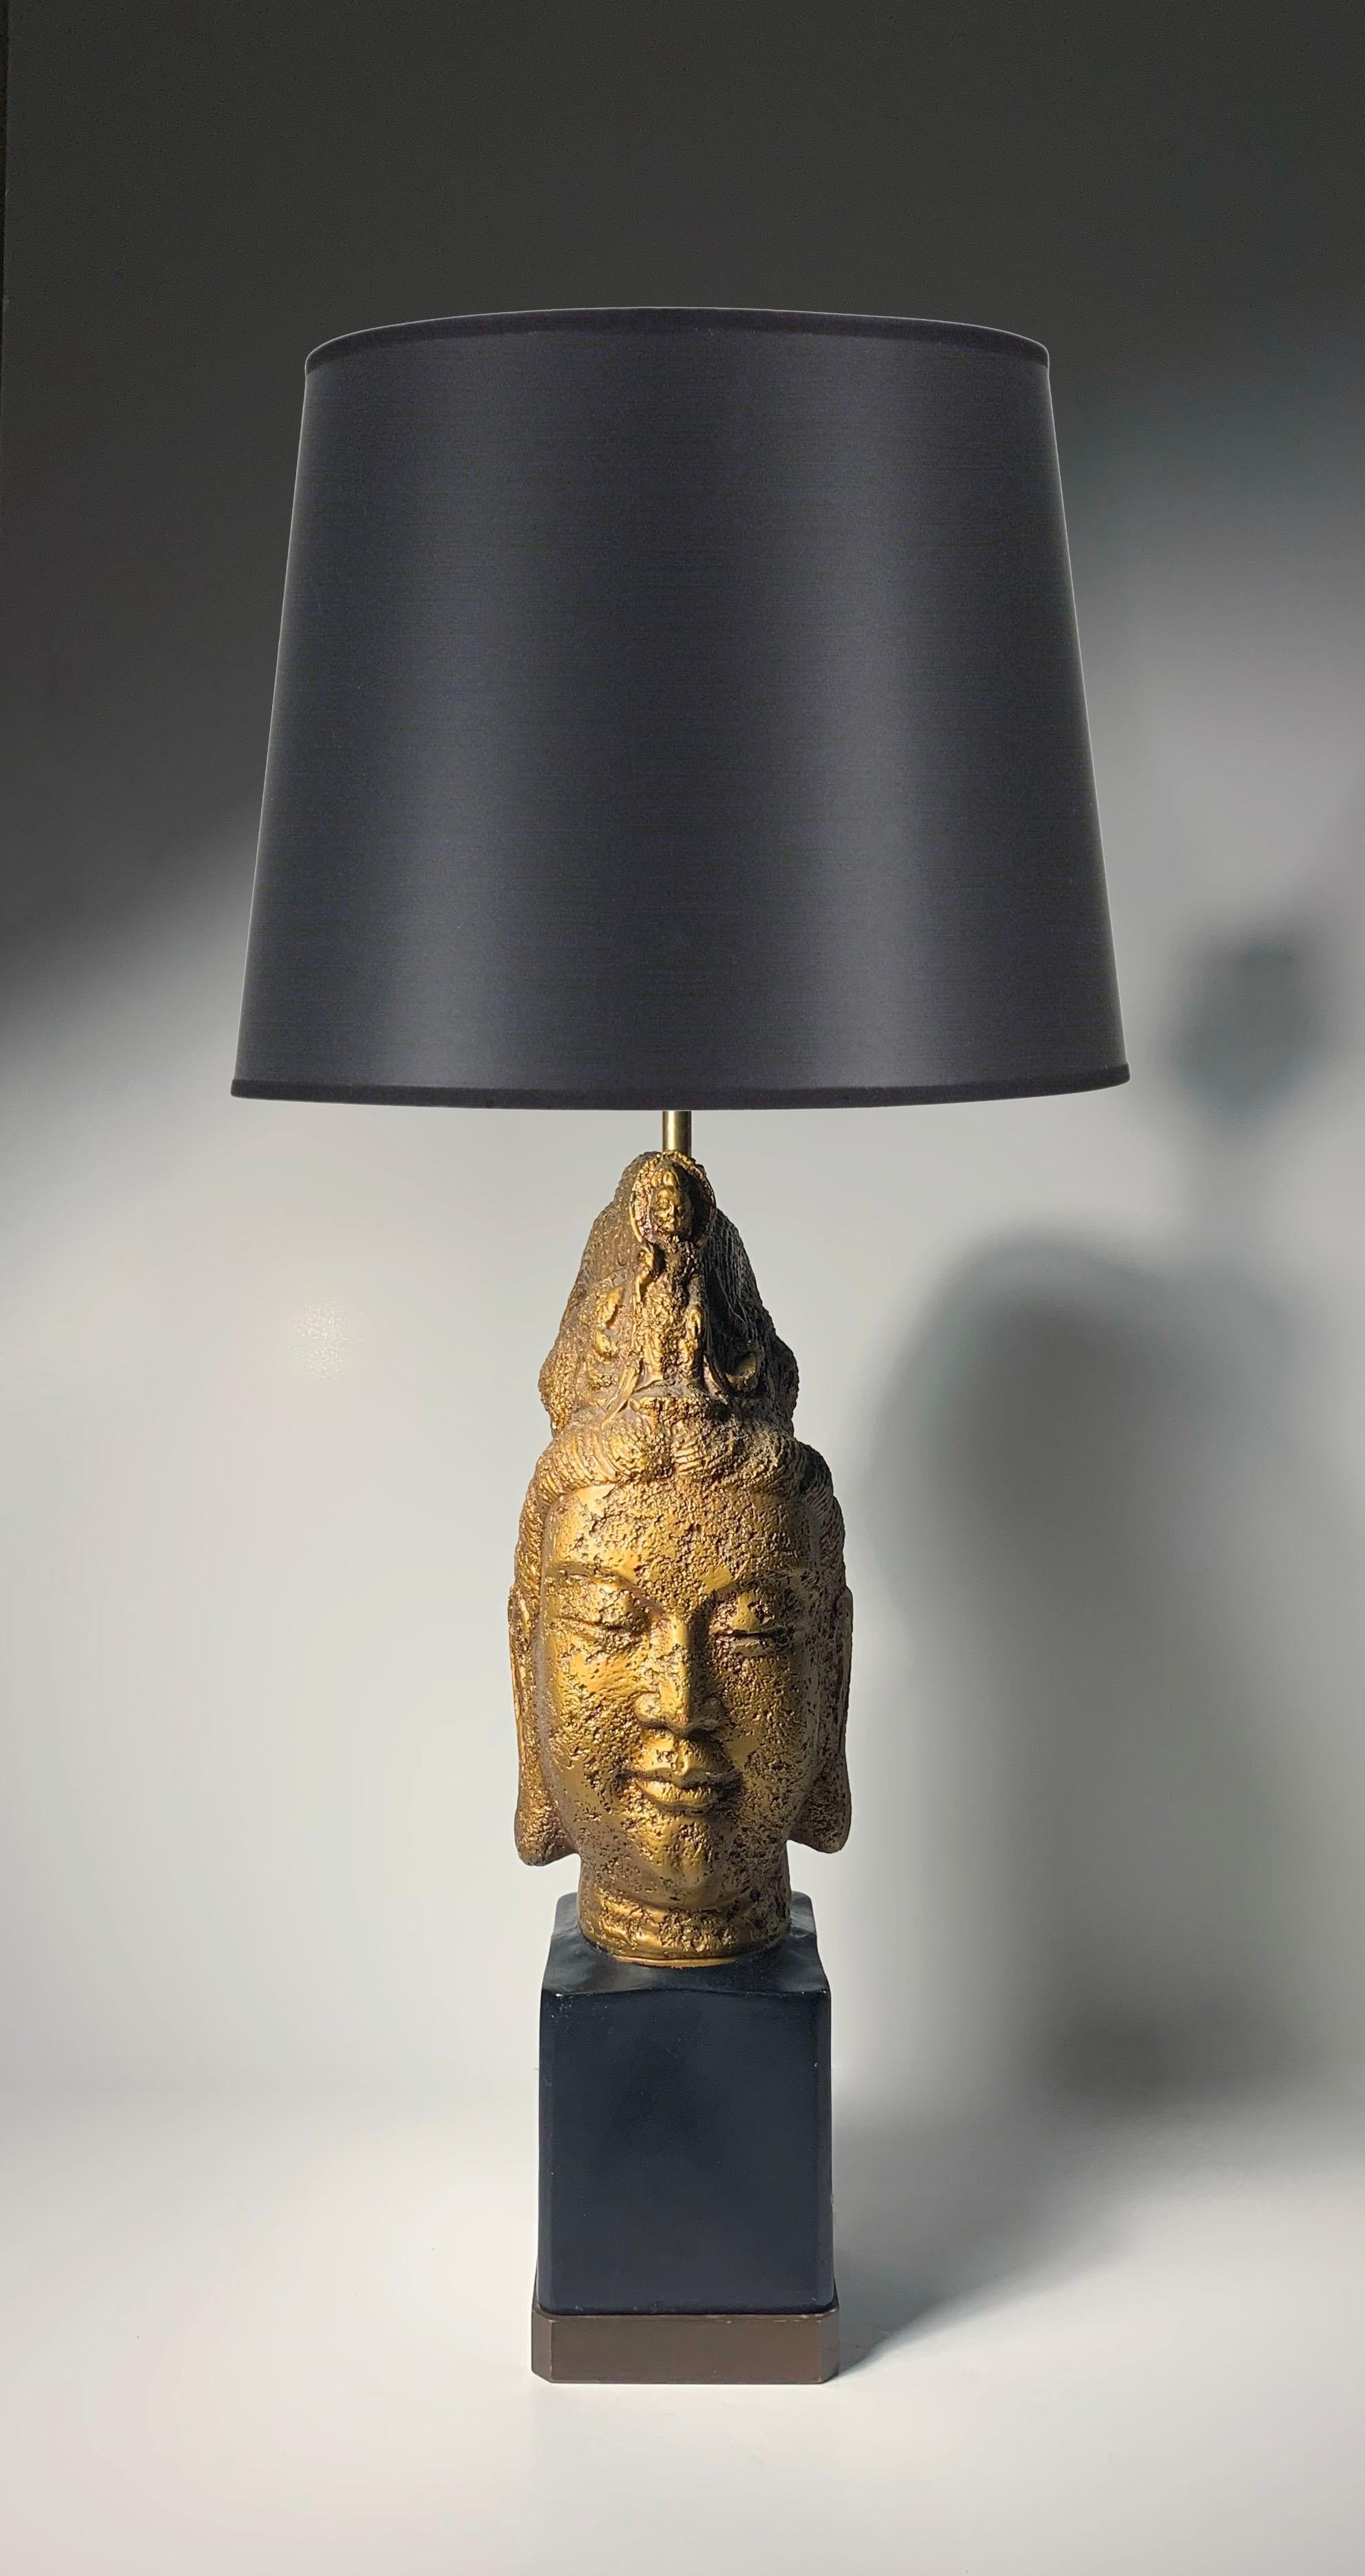 Oversized Vintage Buddha Head Lamp

Manner of James Mont